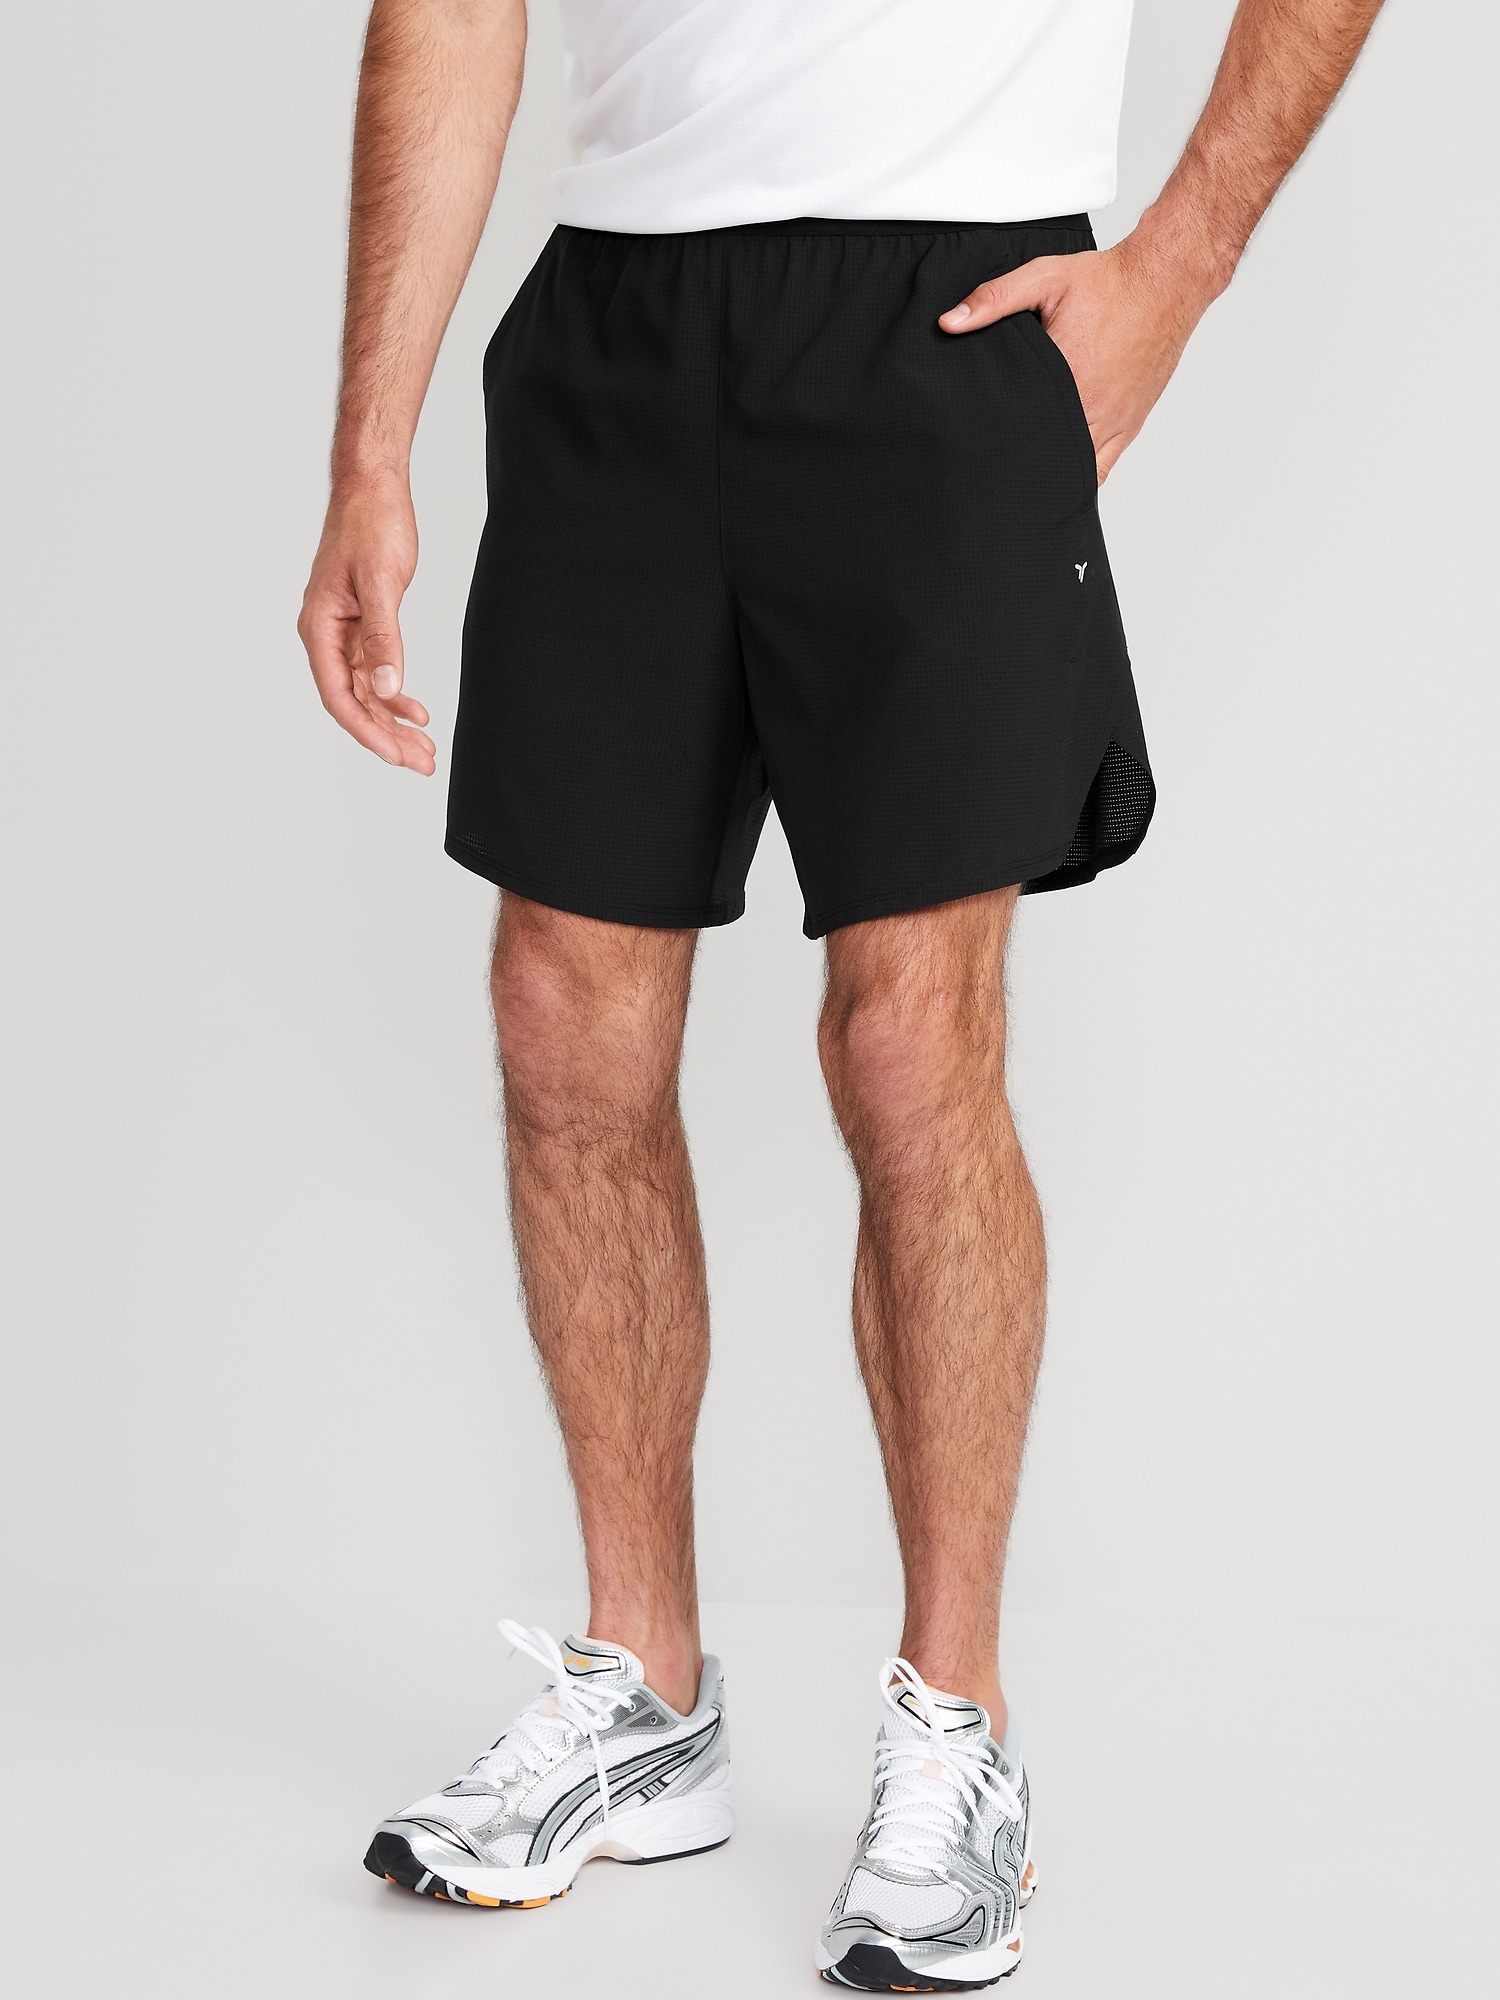 StretchTech Lined Run Shorts -- 7-inch inseam Hot Deal